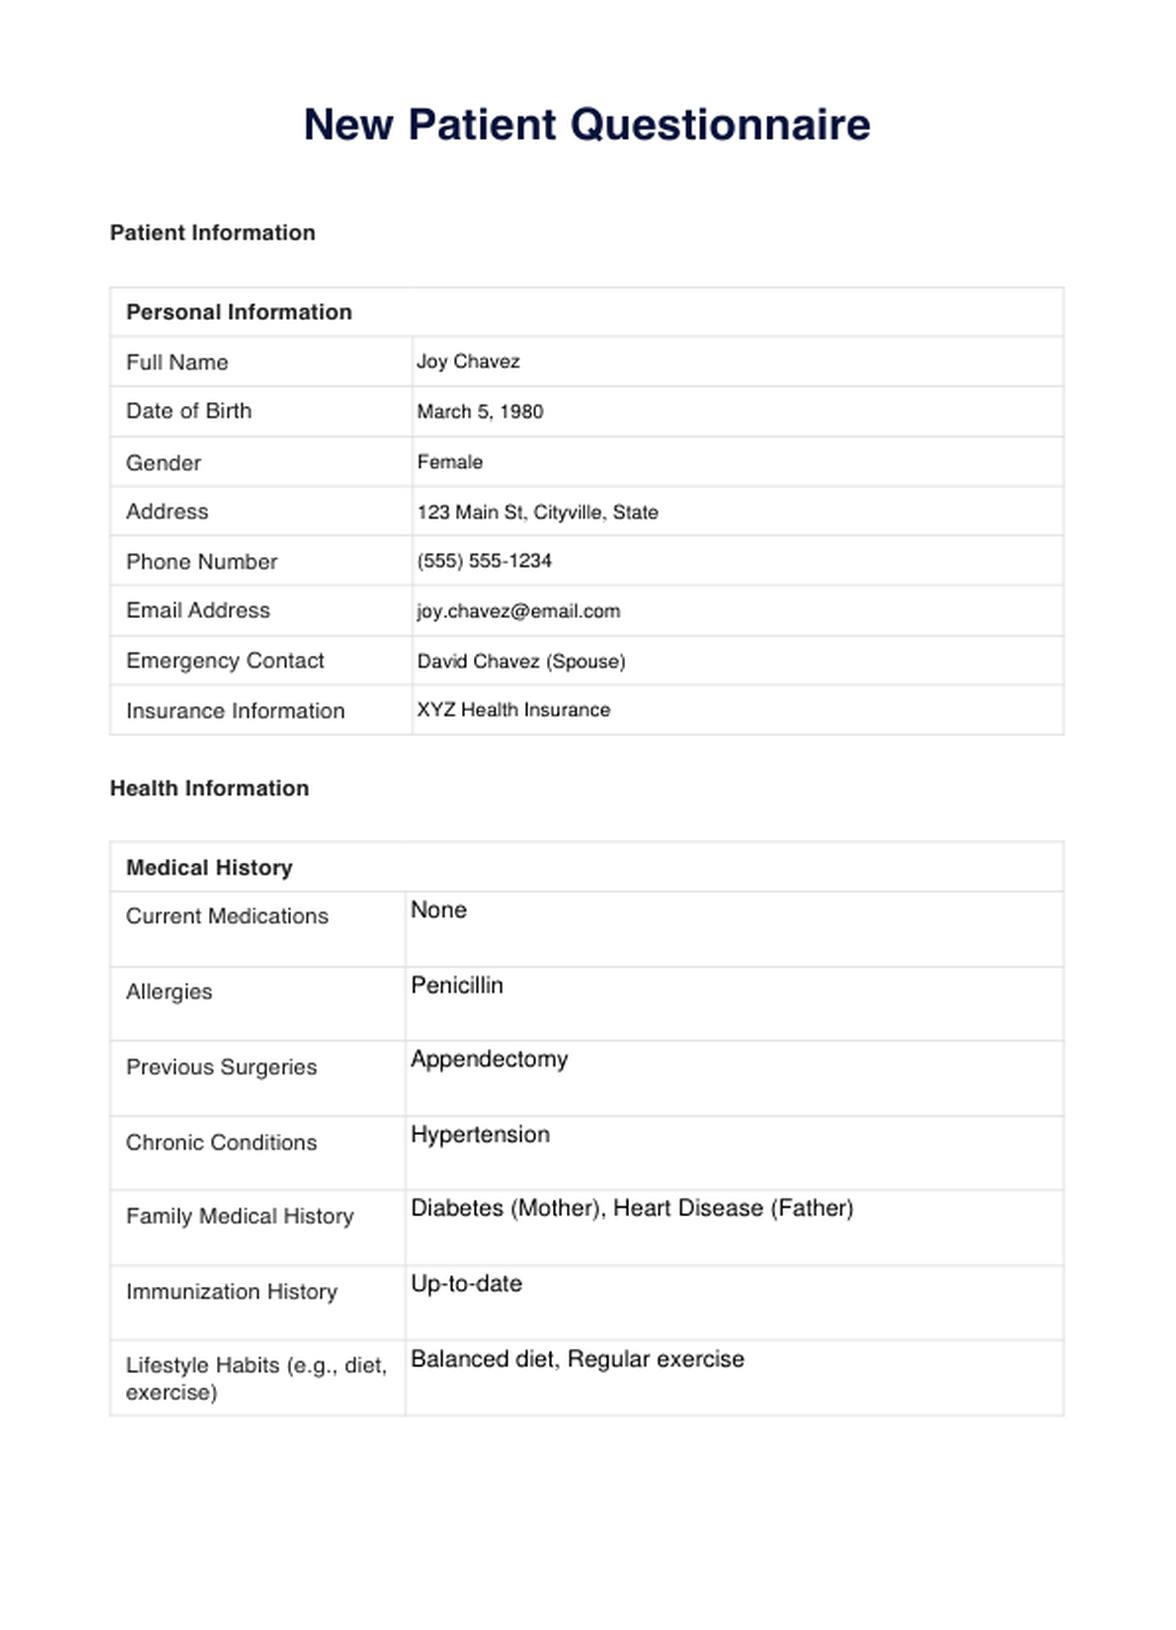 New Patient Questionnaire PDF Example